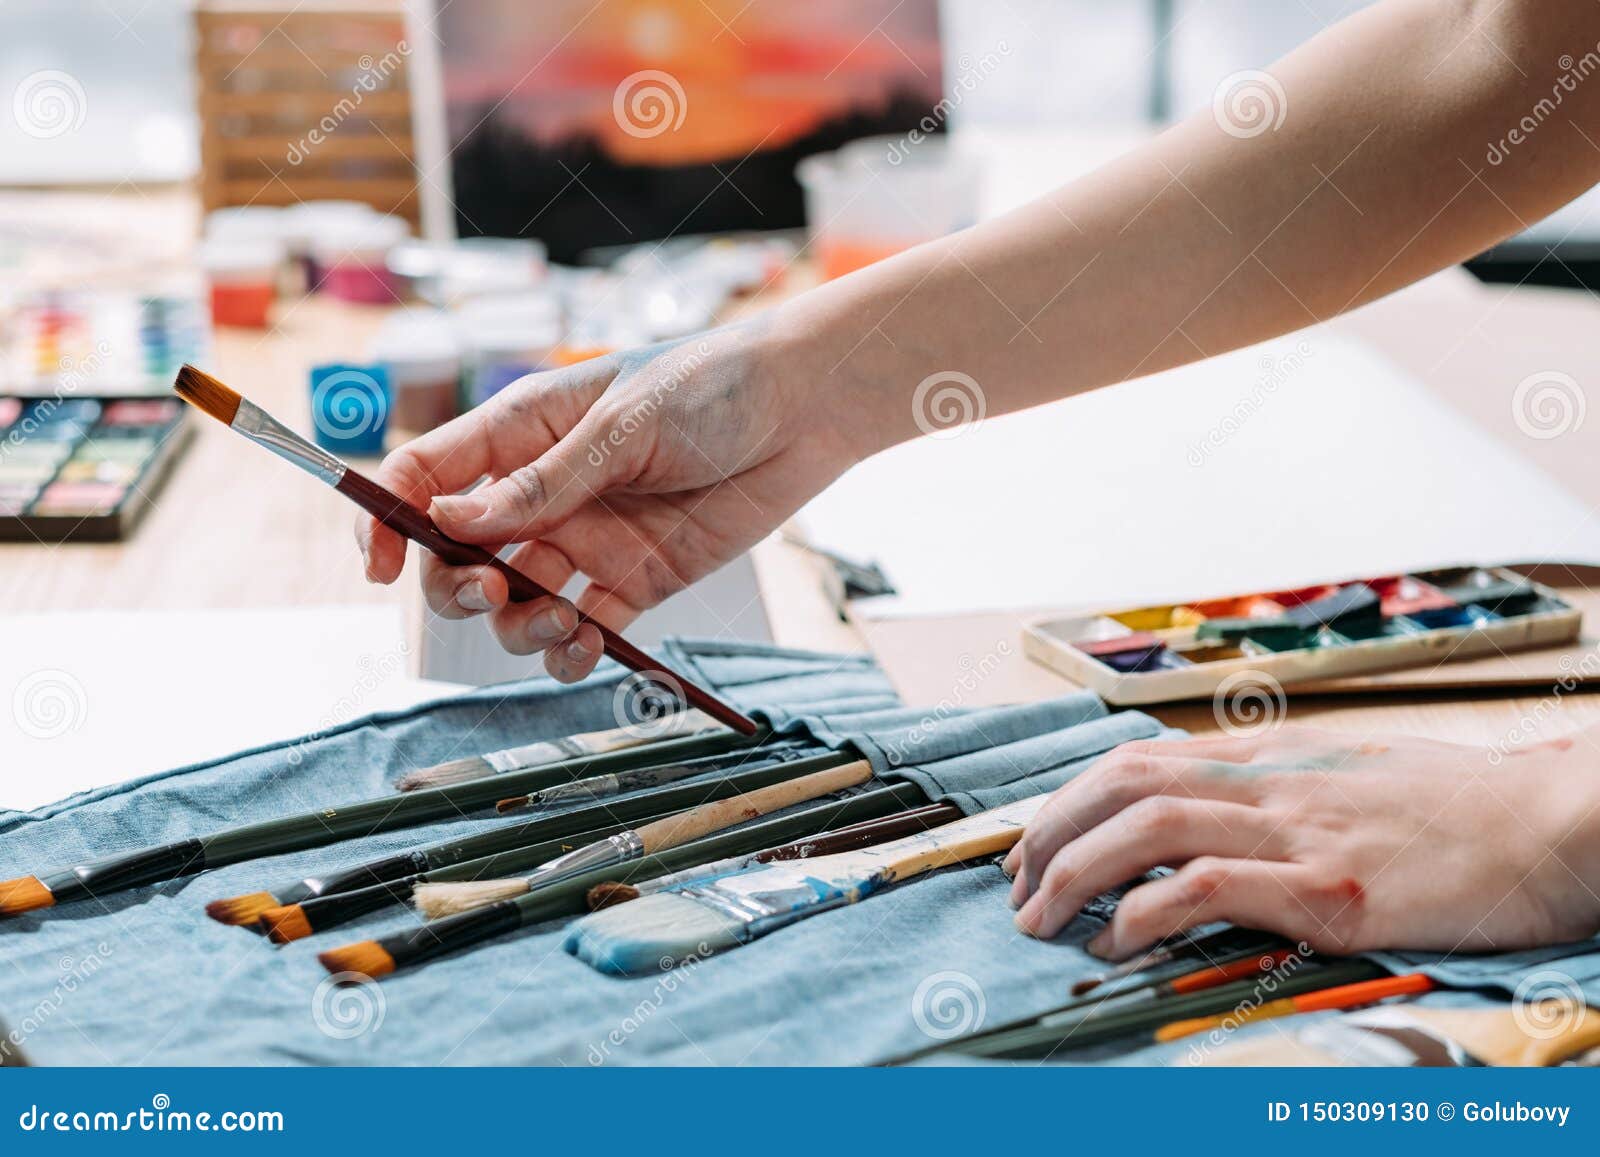 Professional Artist Kit Painter Choosing Brush Stock Photo - Image of ...